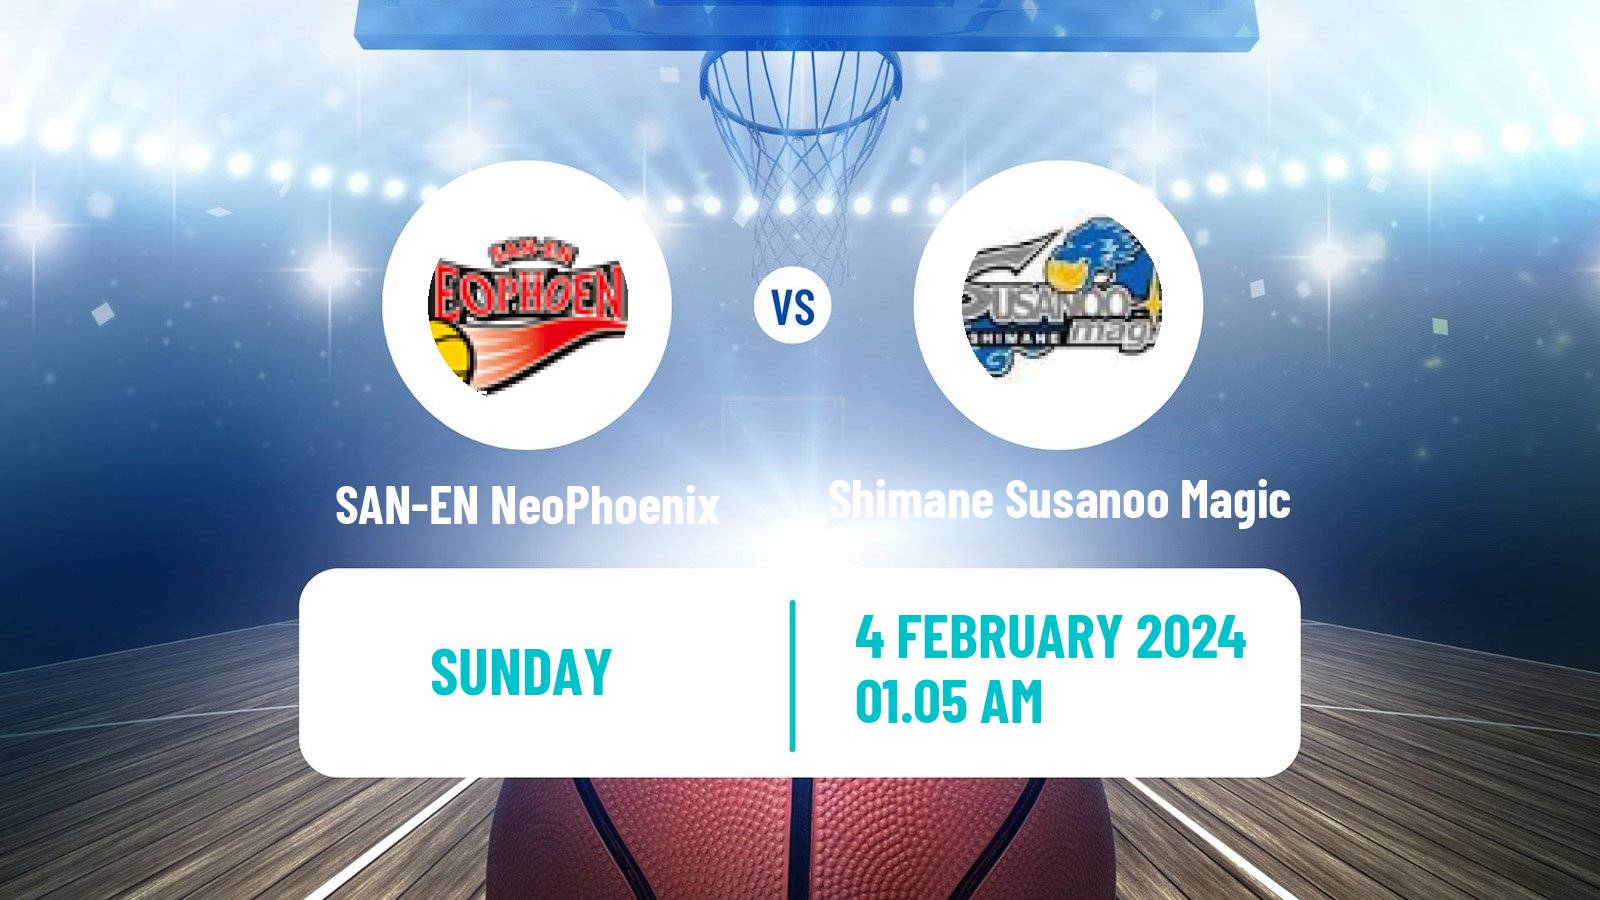 Basketball BJ League SAN-EN NeoPhoenix - Shimane Susanoo Magic